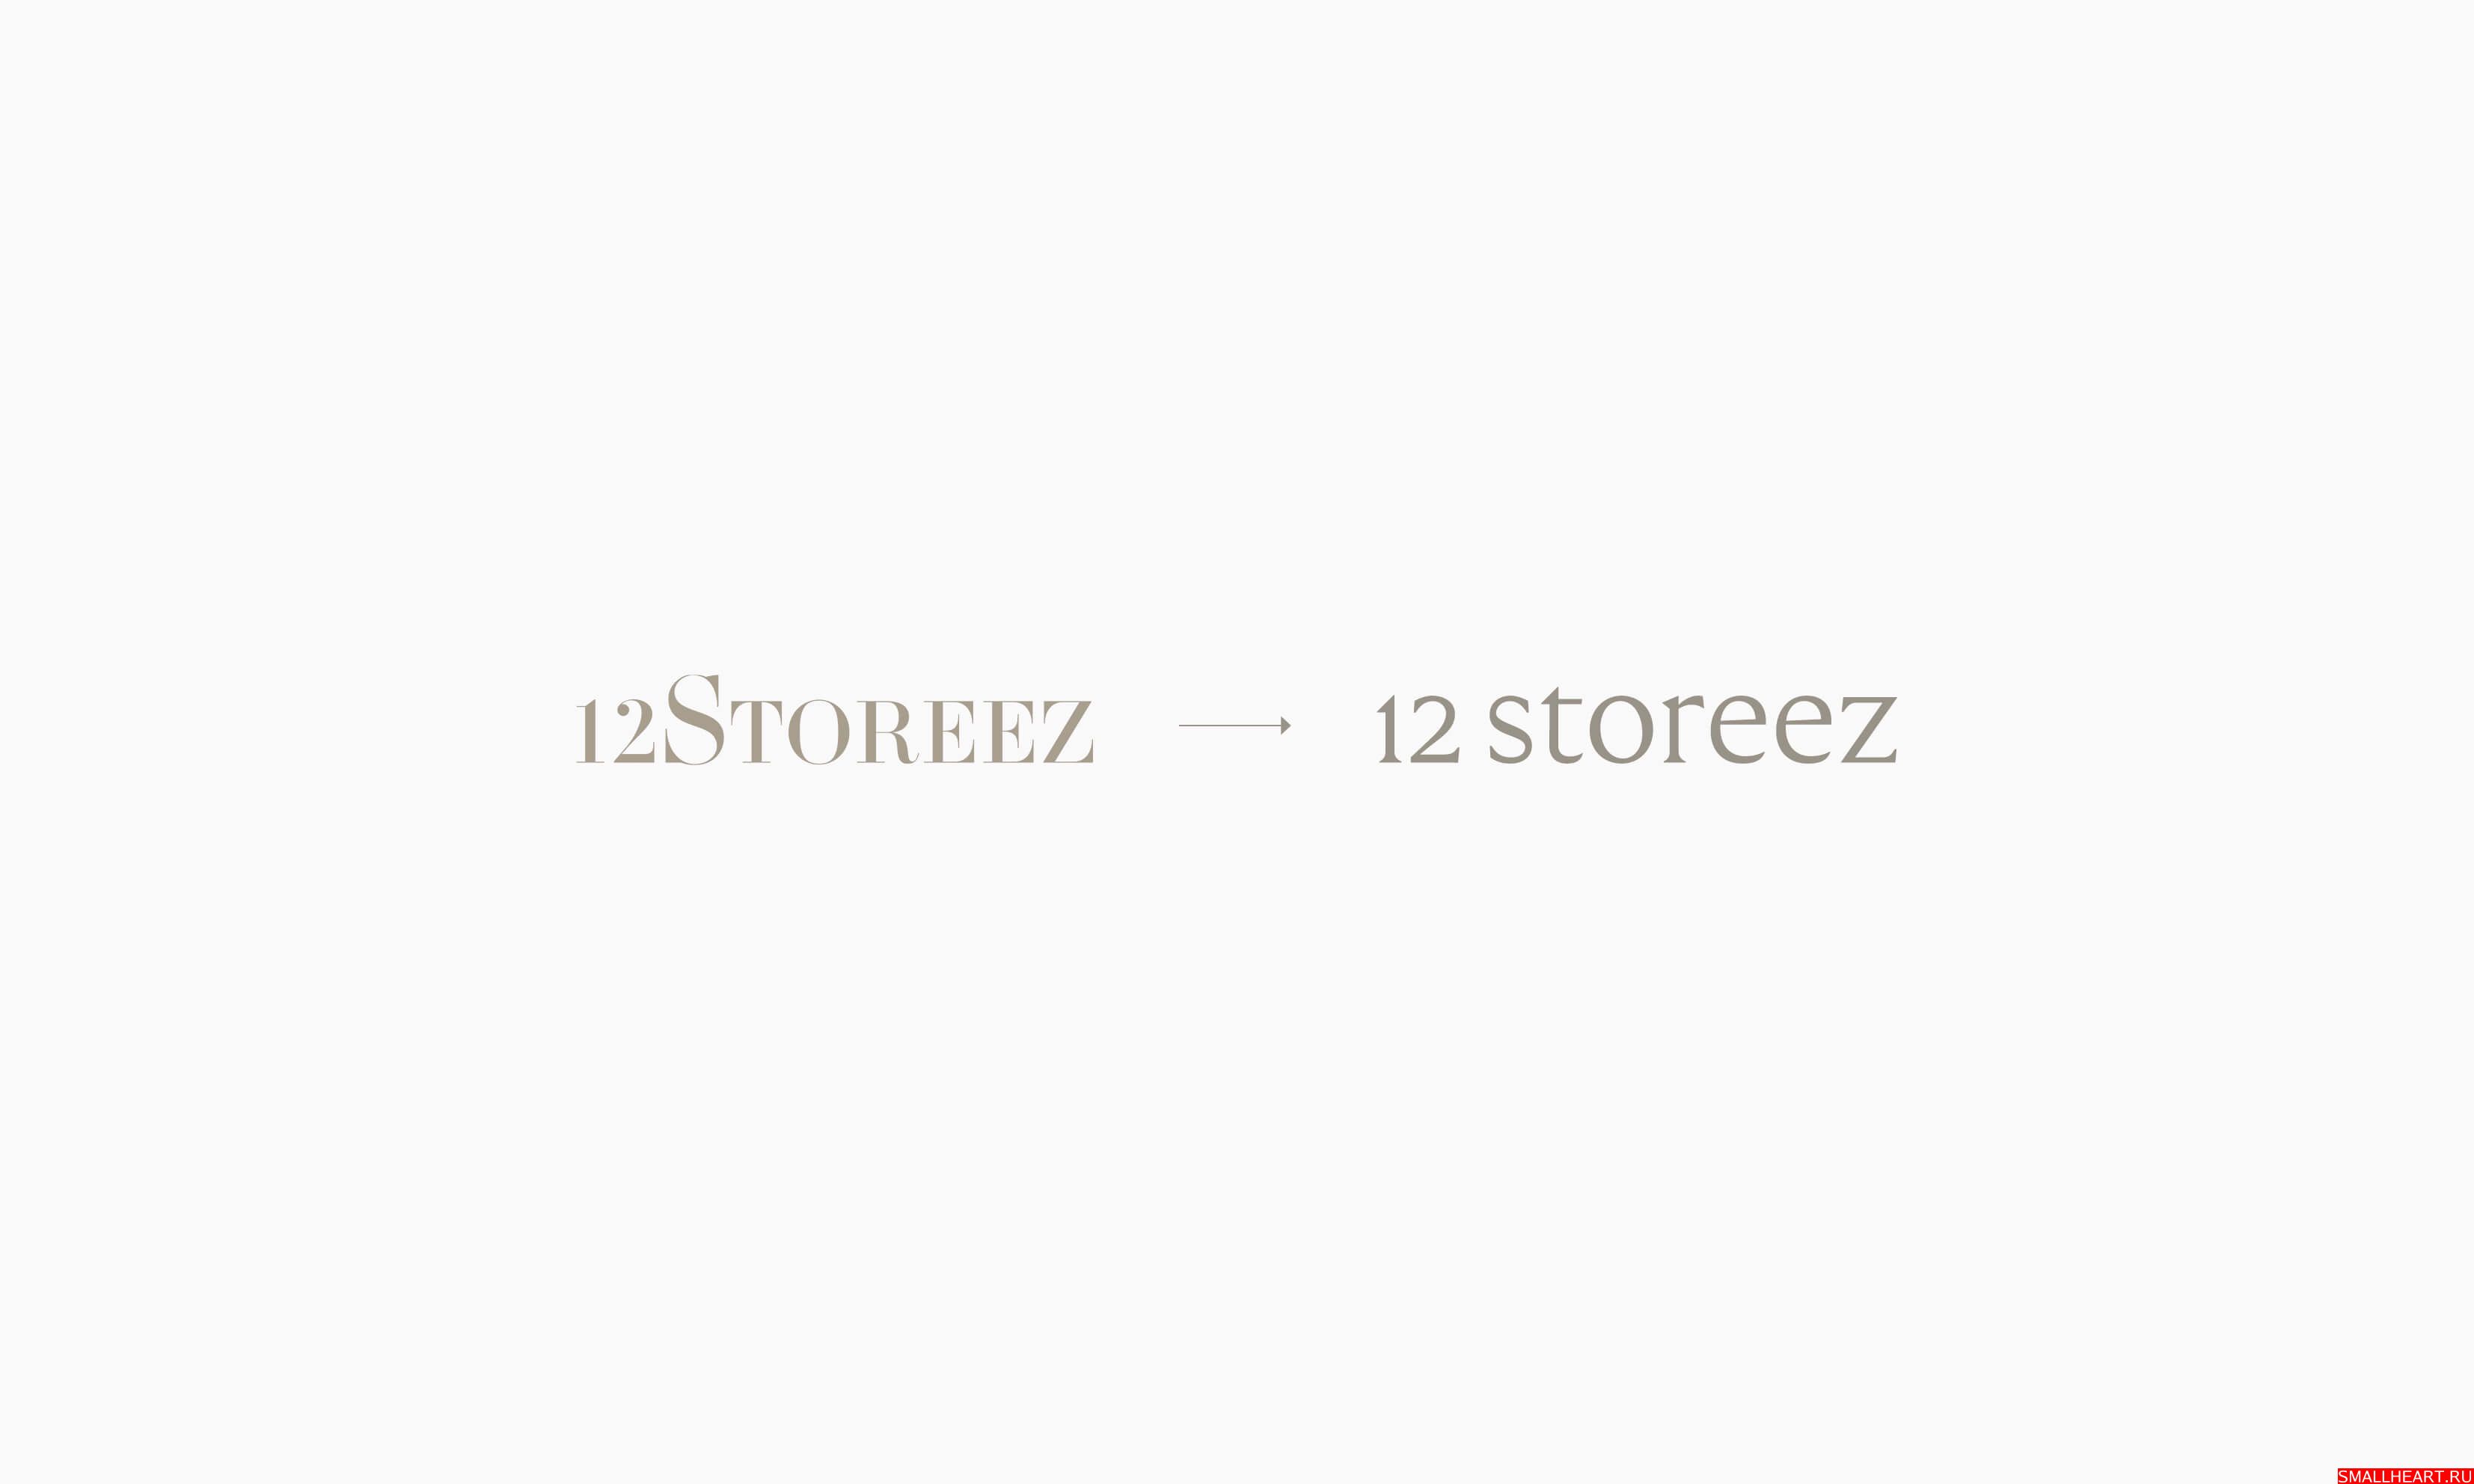 12 Storeez — Created by Suprematika branding agency. 